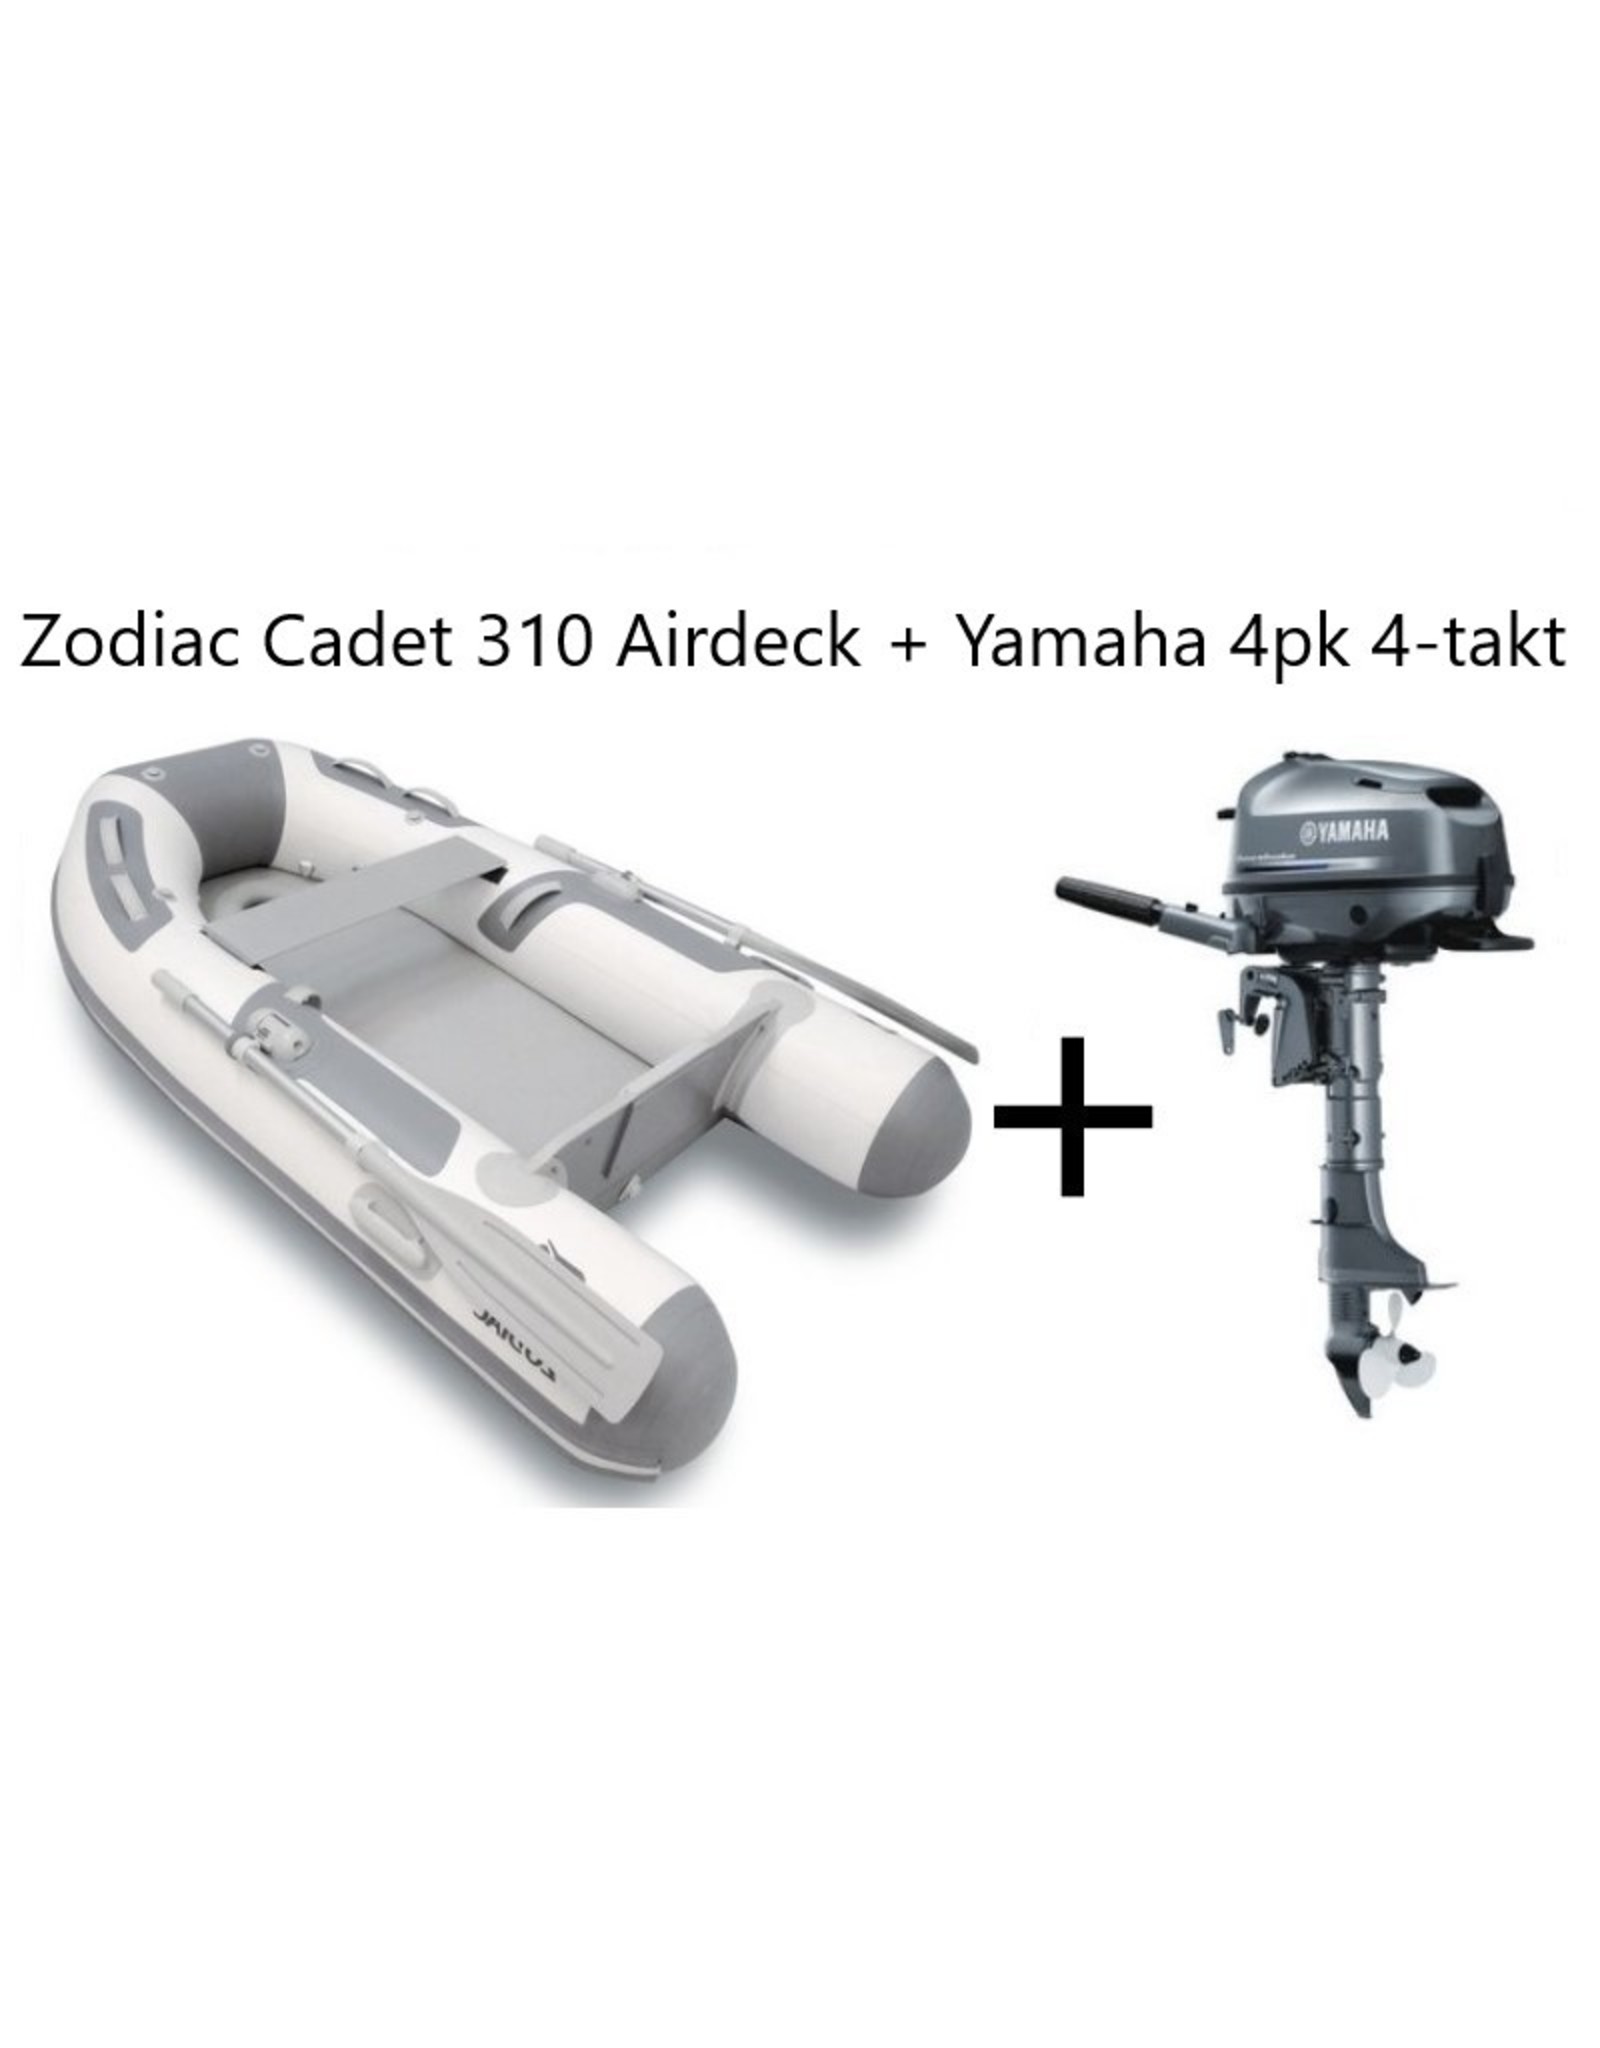 Zodiac Zodiac Cadet 310 Airdeck + Yamaha 4pk 4-takt (Vaarbewijsvrij!)